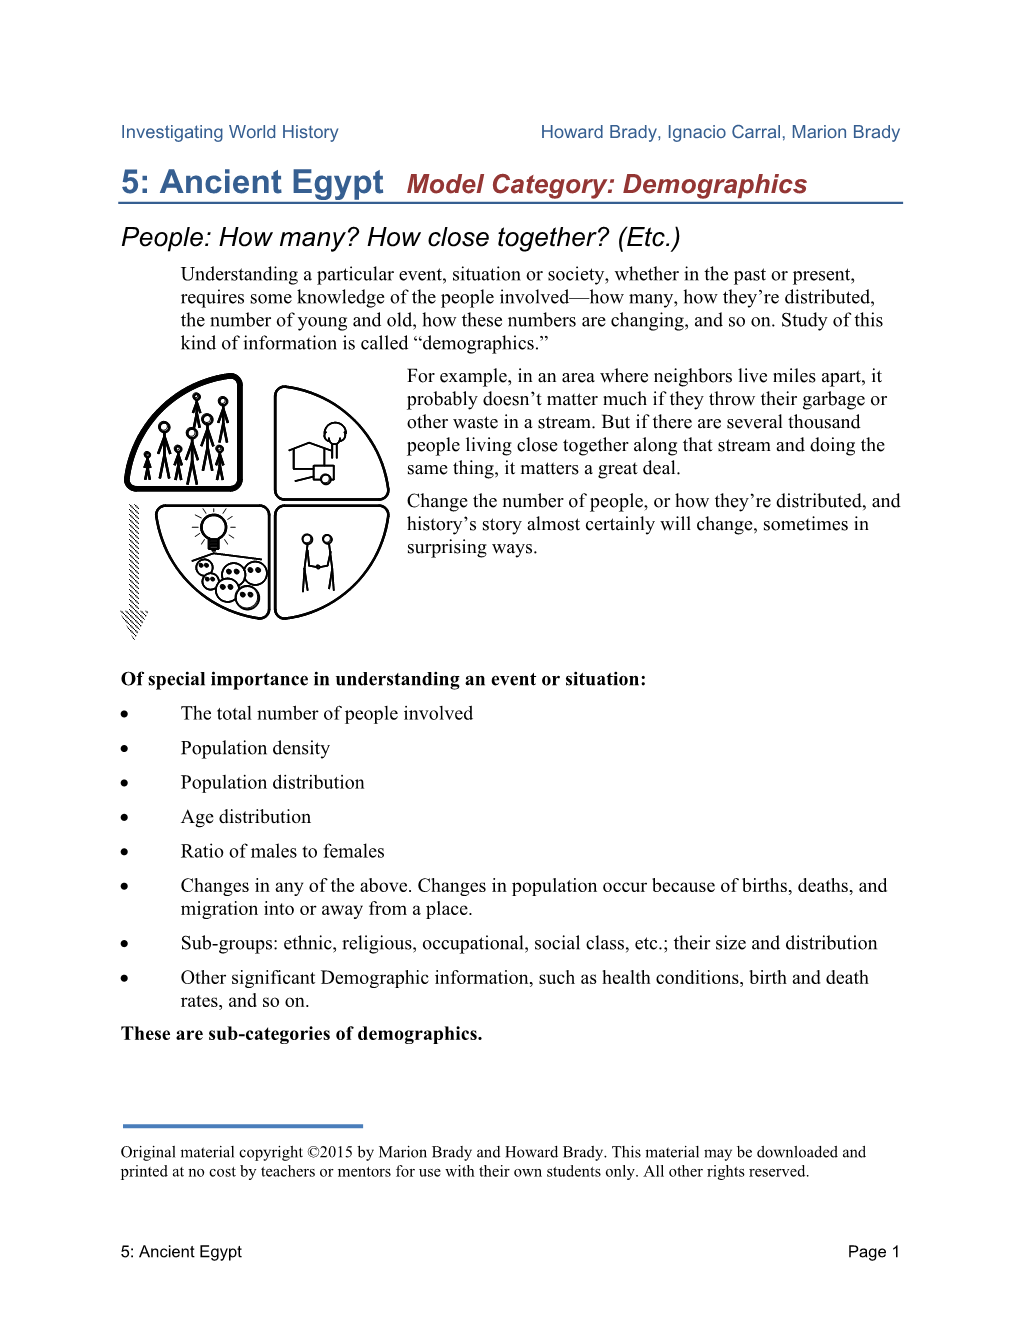 5. Ancient Egypt